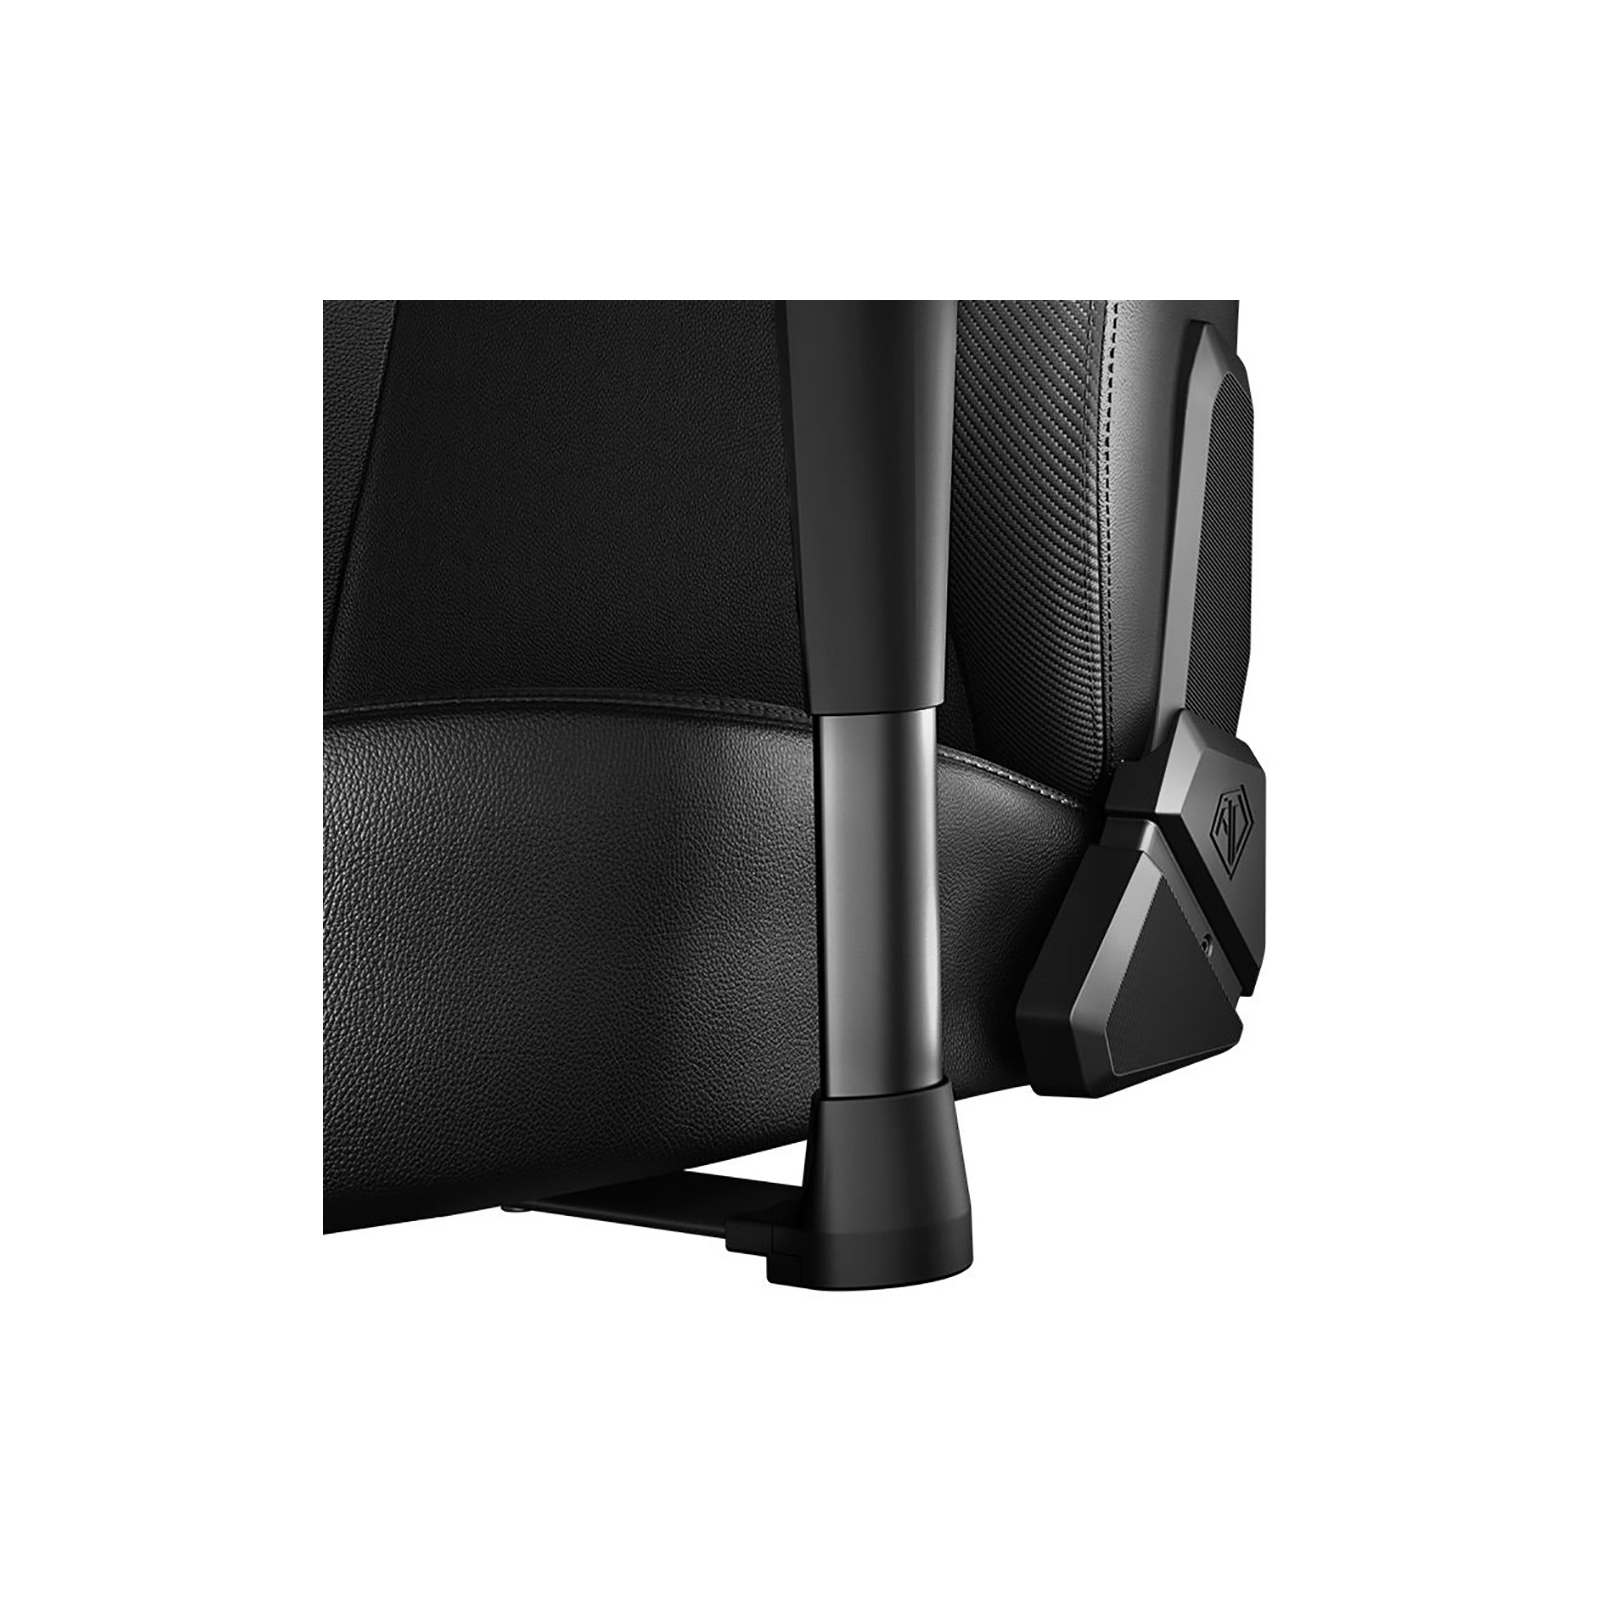 Кресло игровое Anda Seat Phantom 3 White Size L (AD18Y-06-W-PV) изображение 9